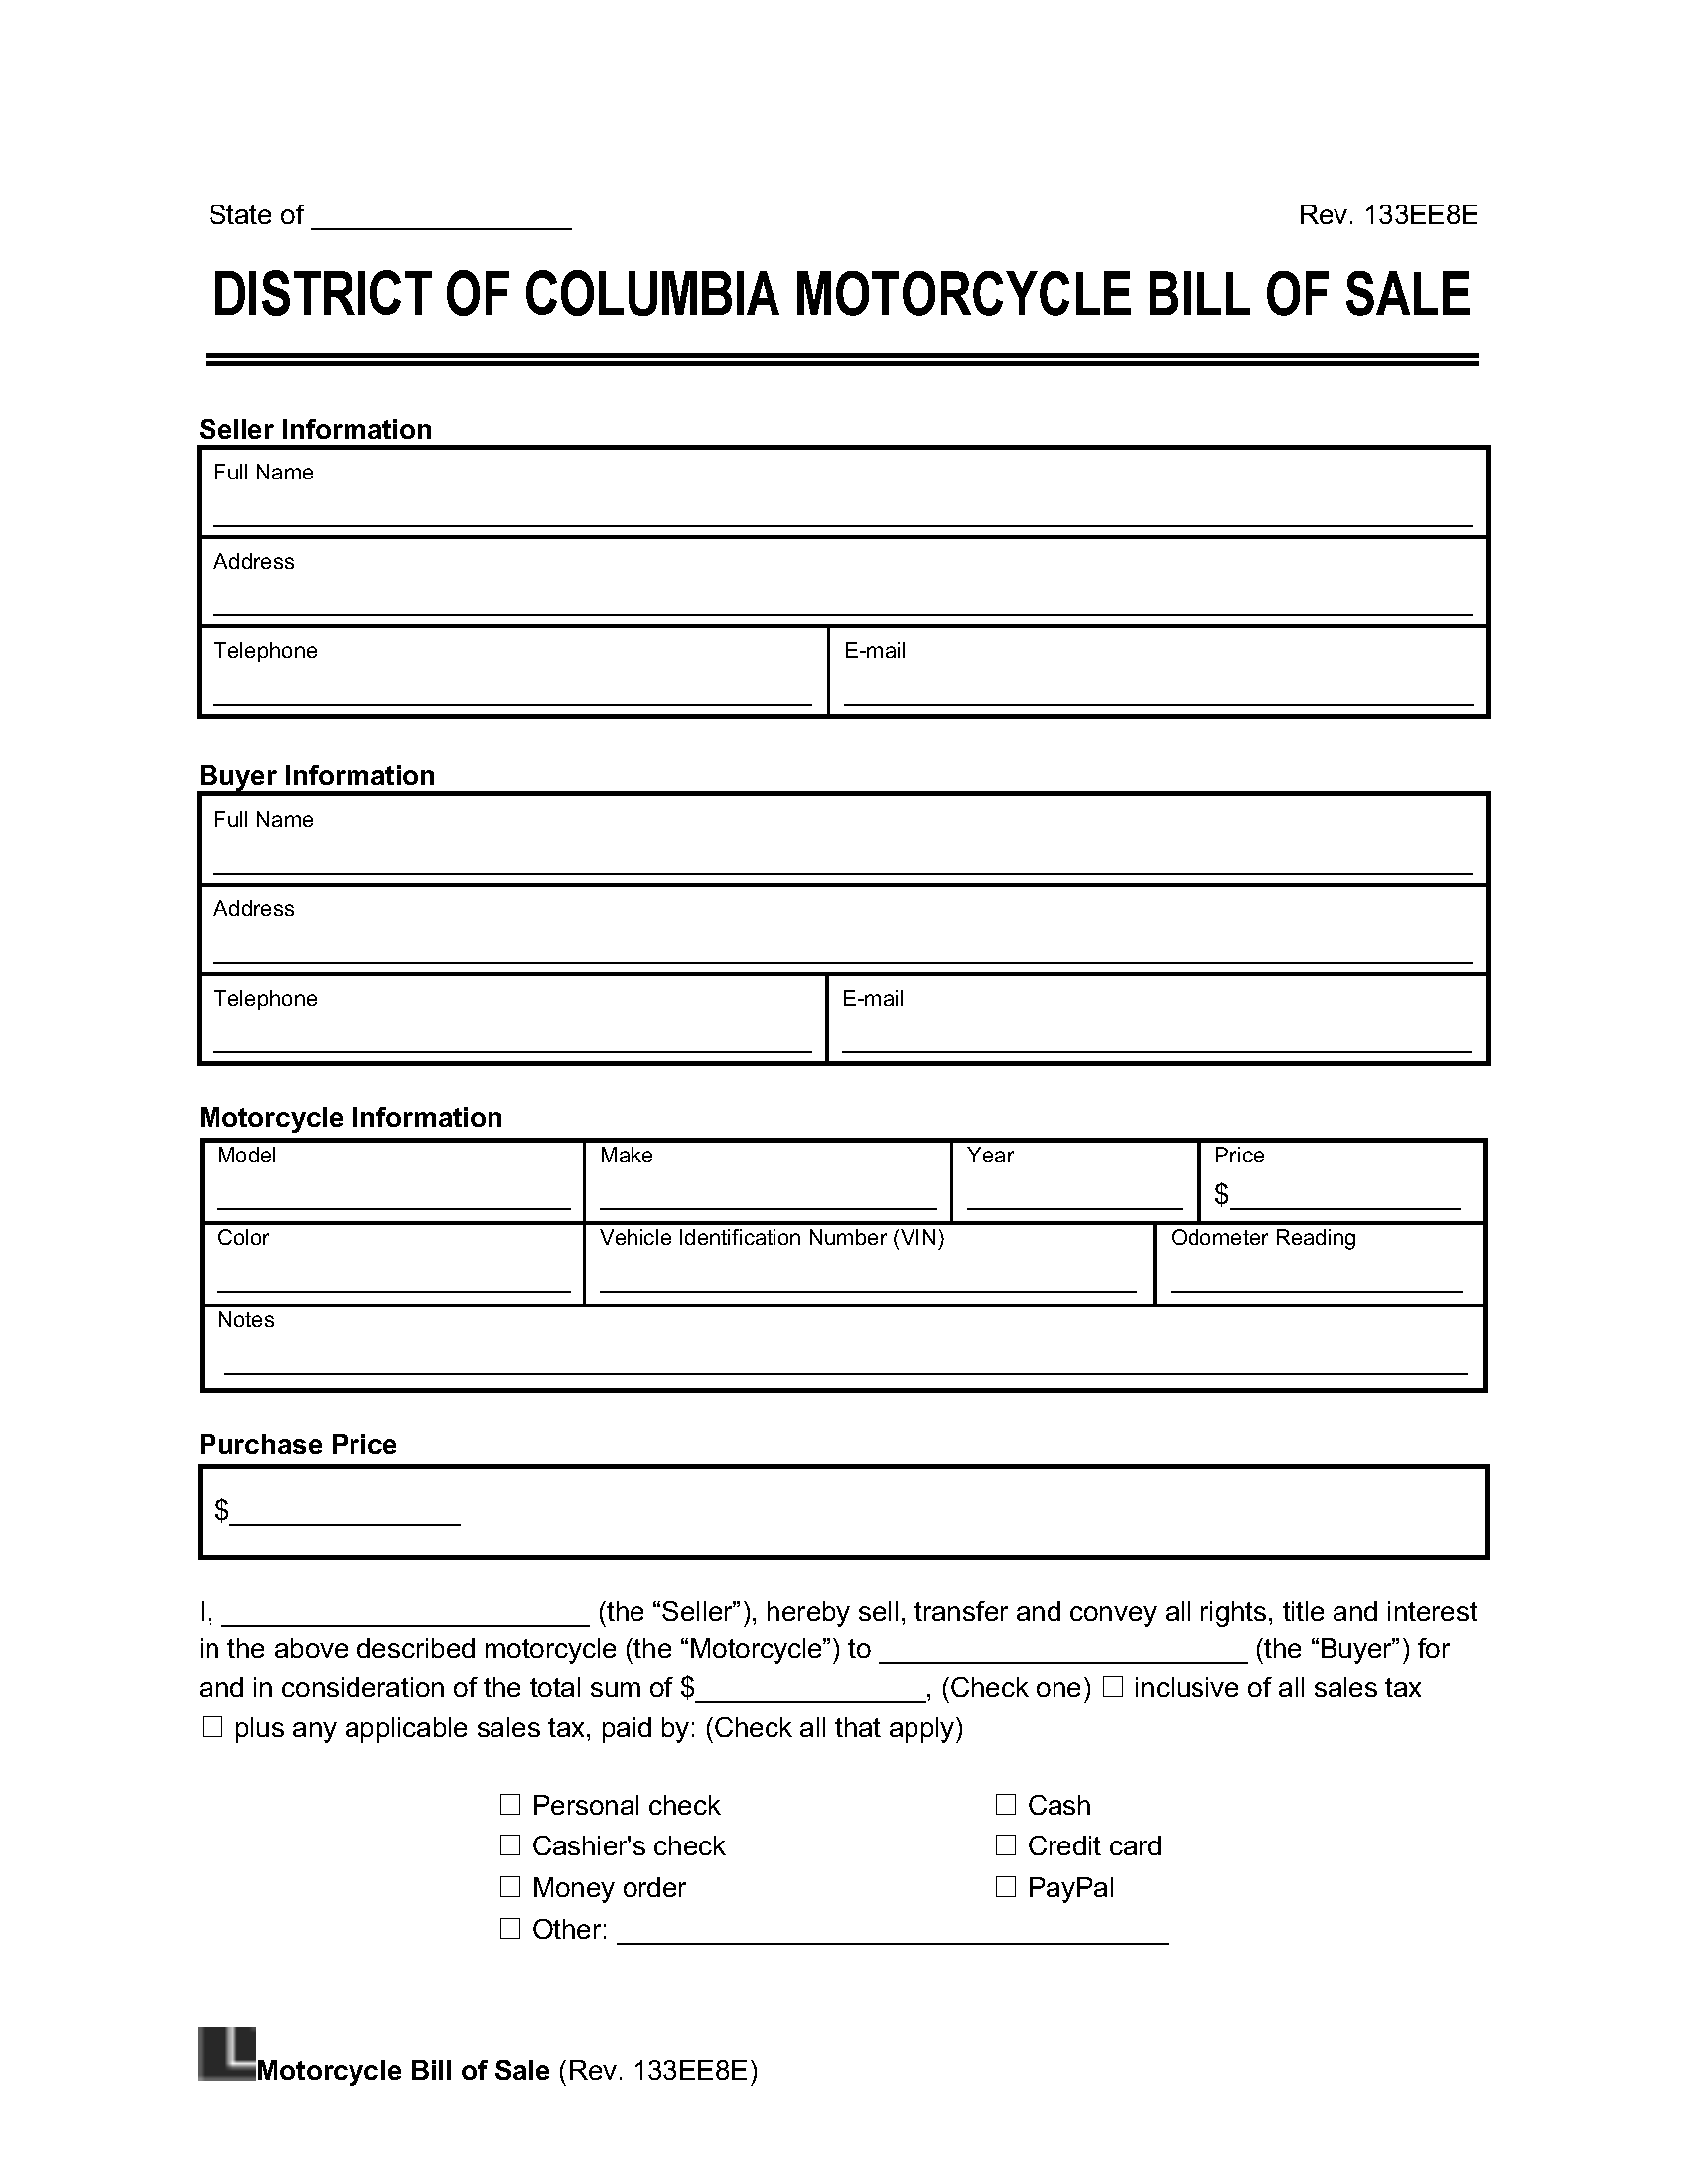 washington, dc motorcycle bill of sale